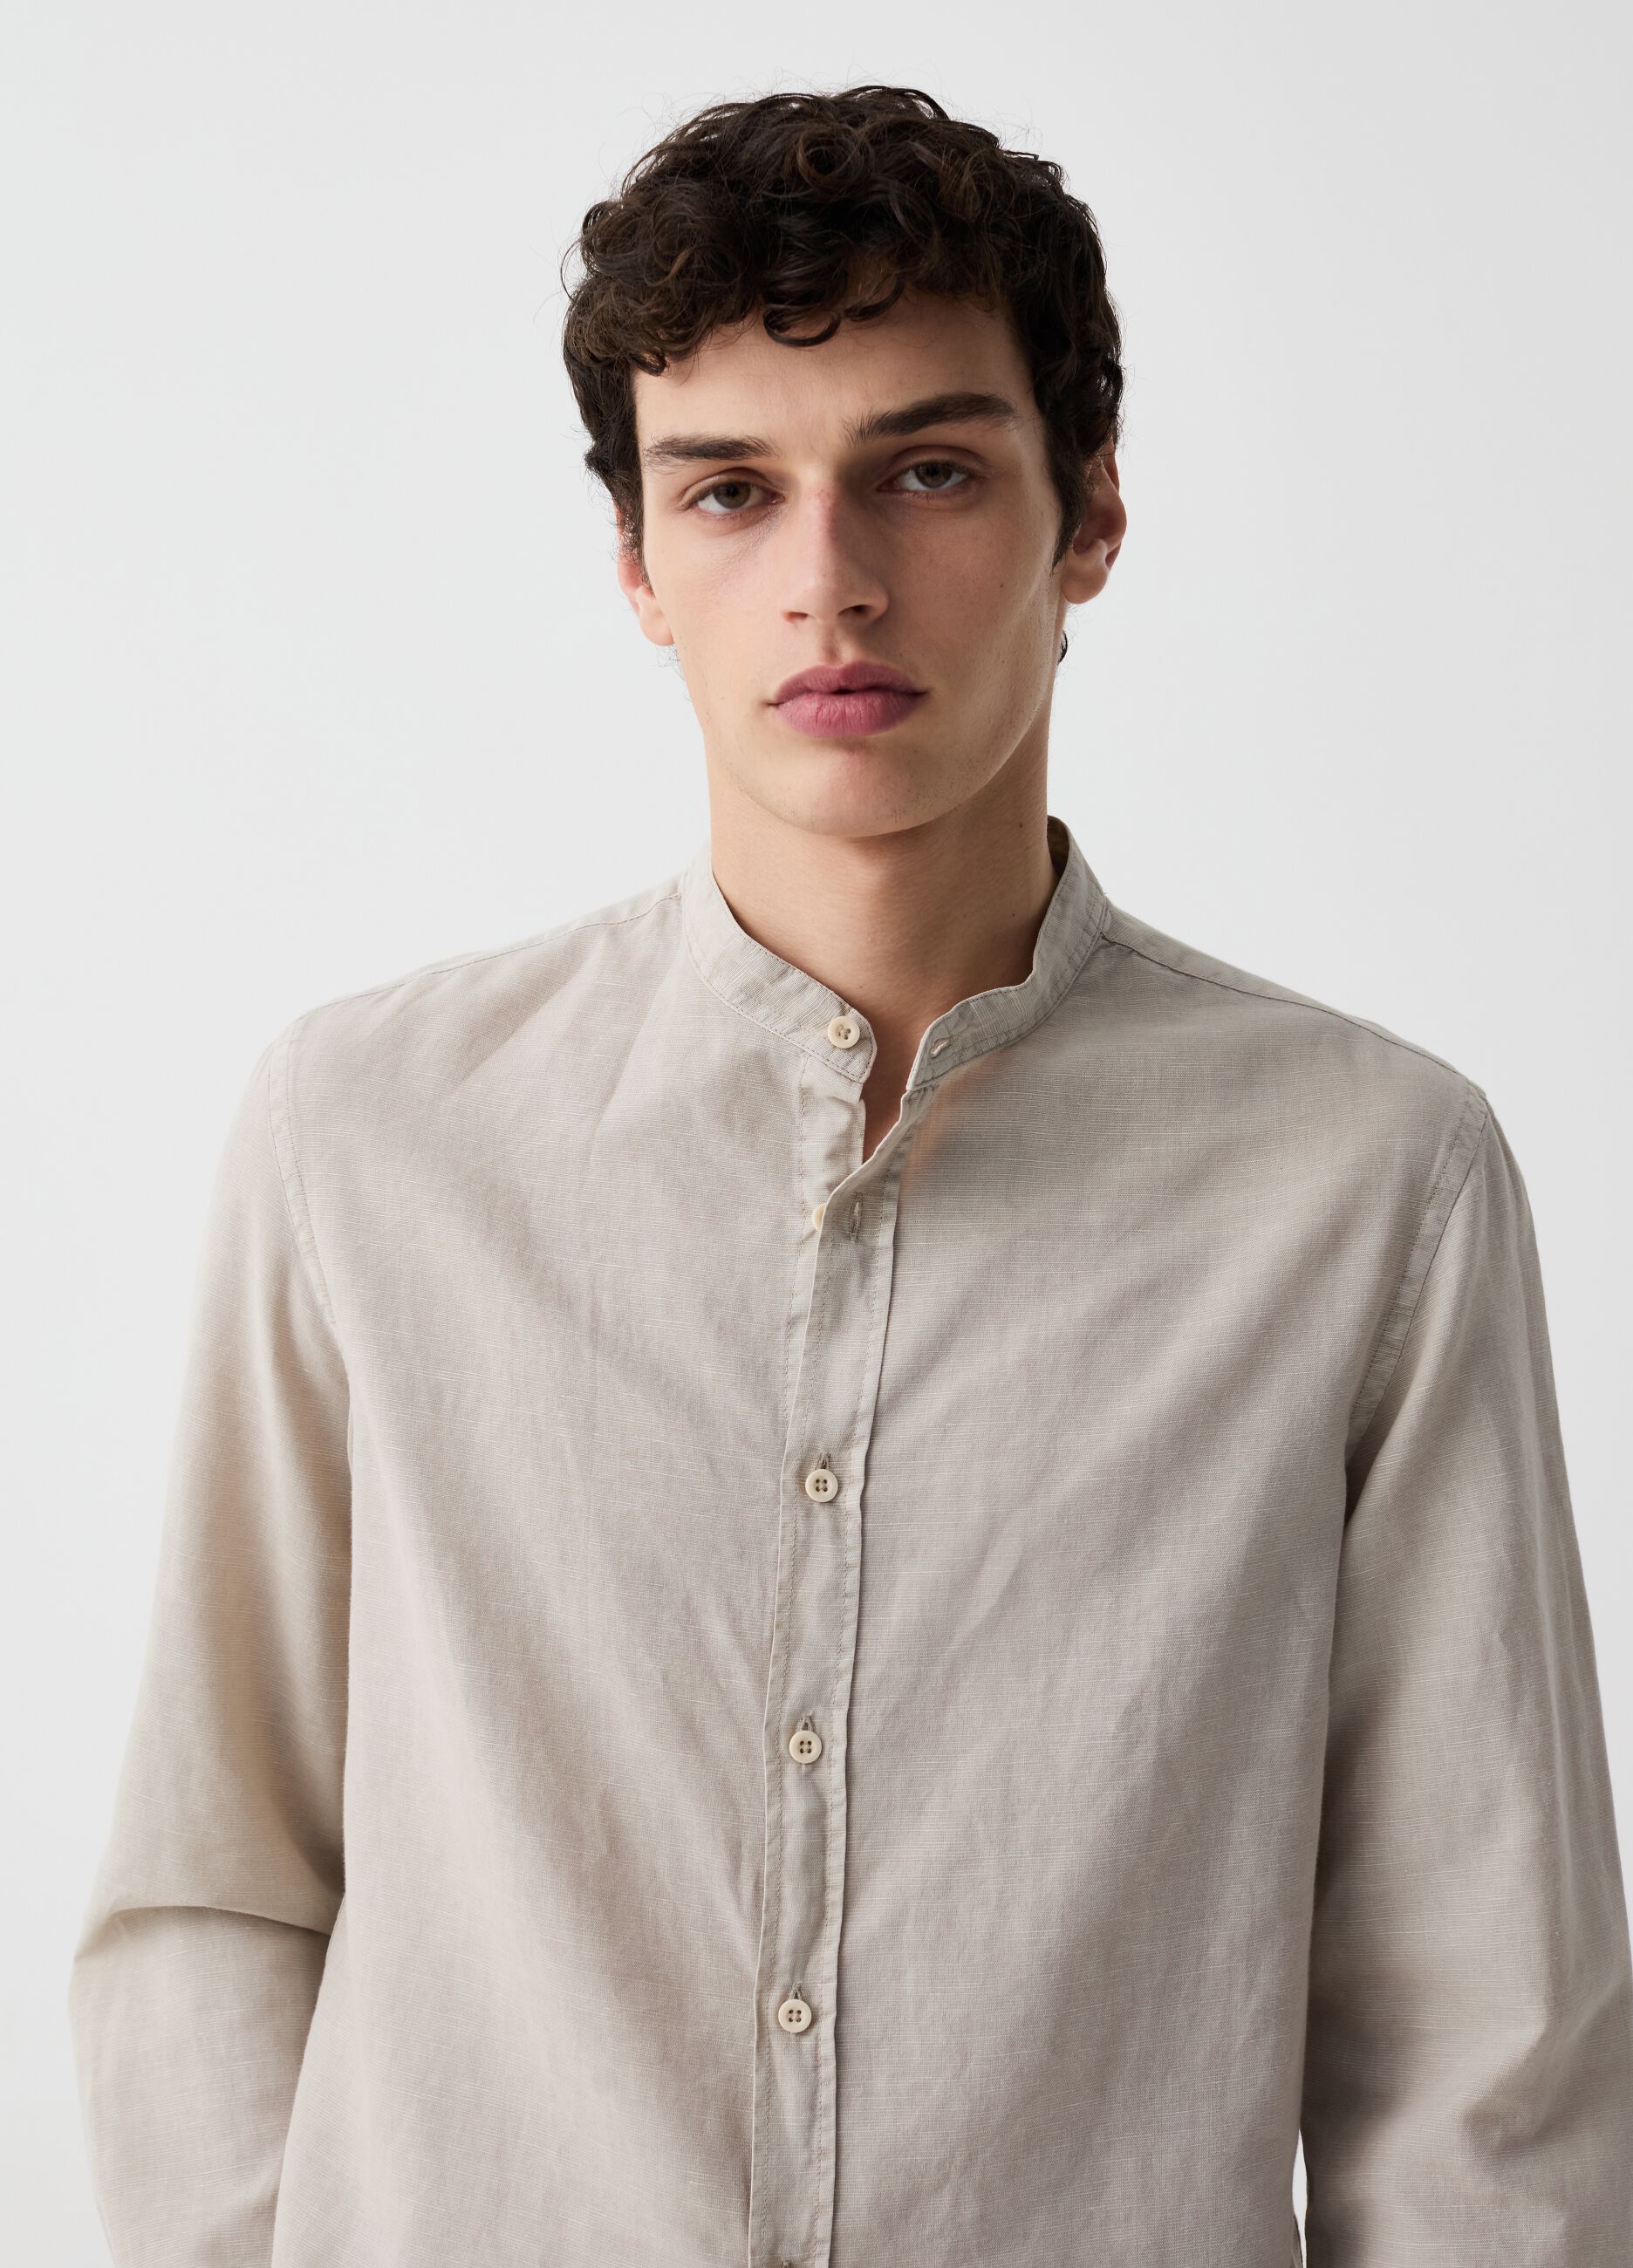 Cotton and linen shirt with mandarin collar